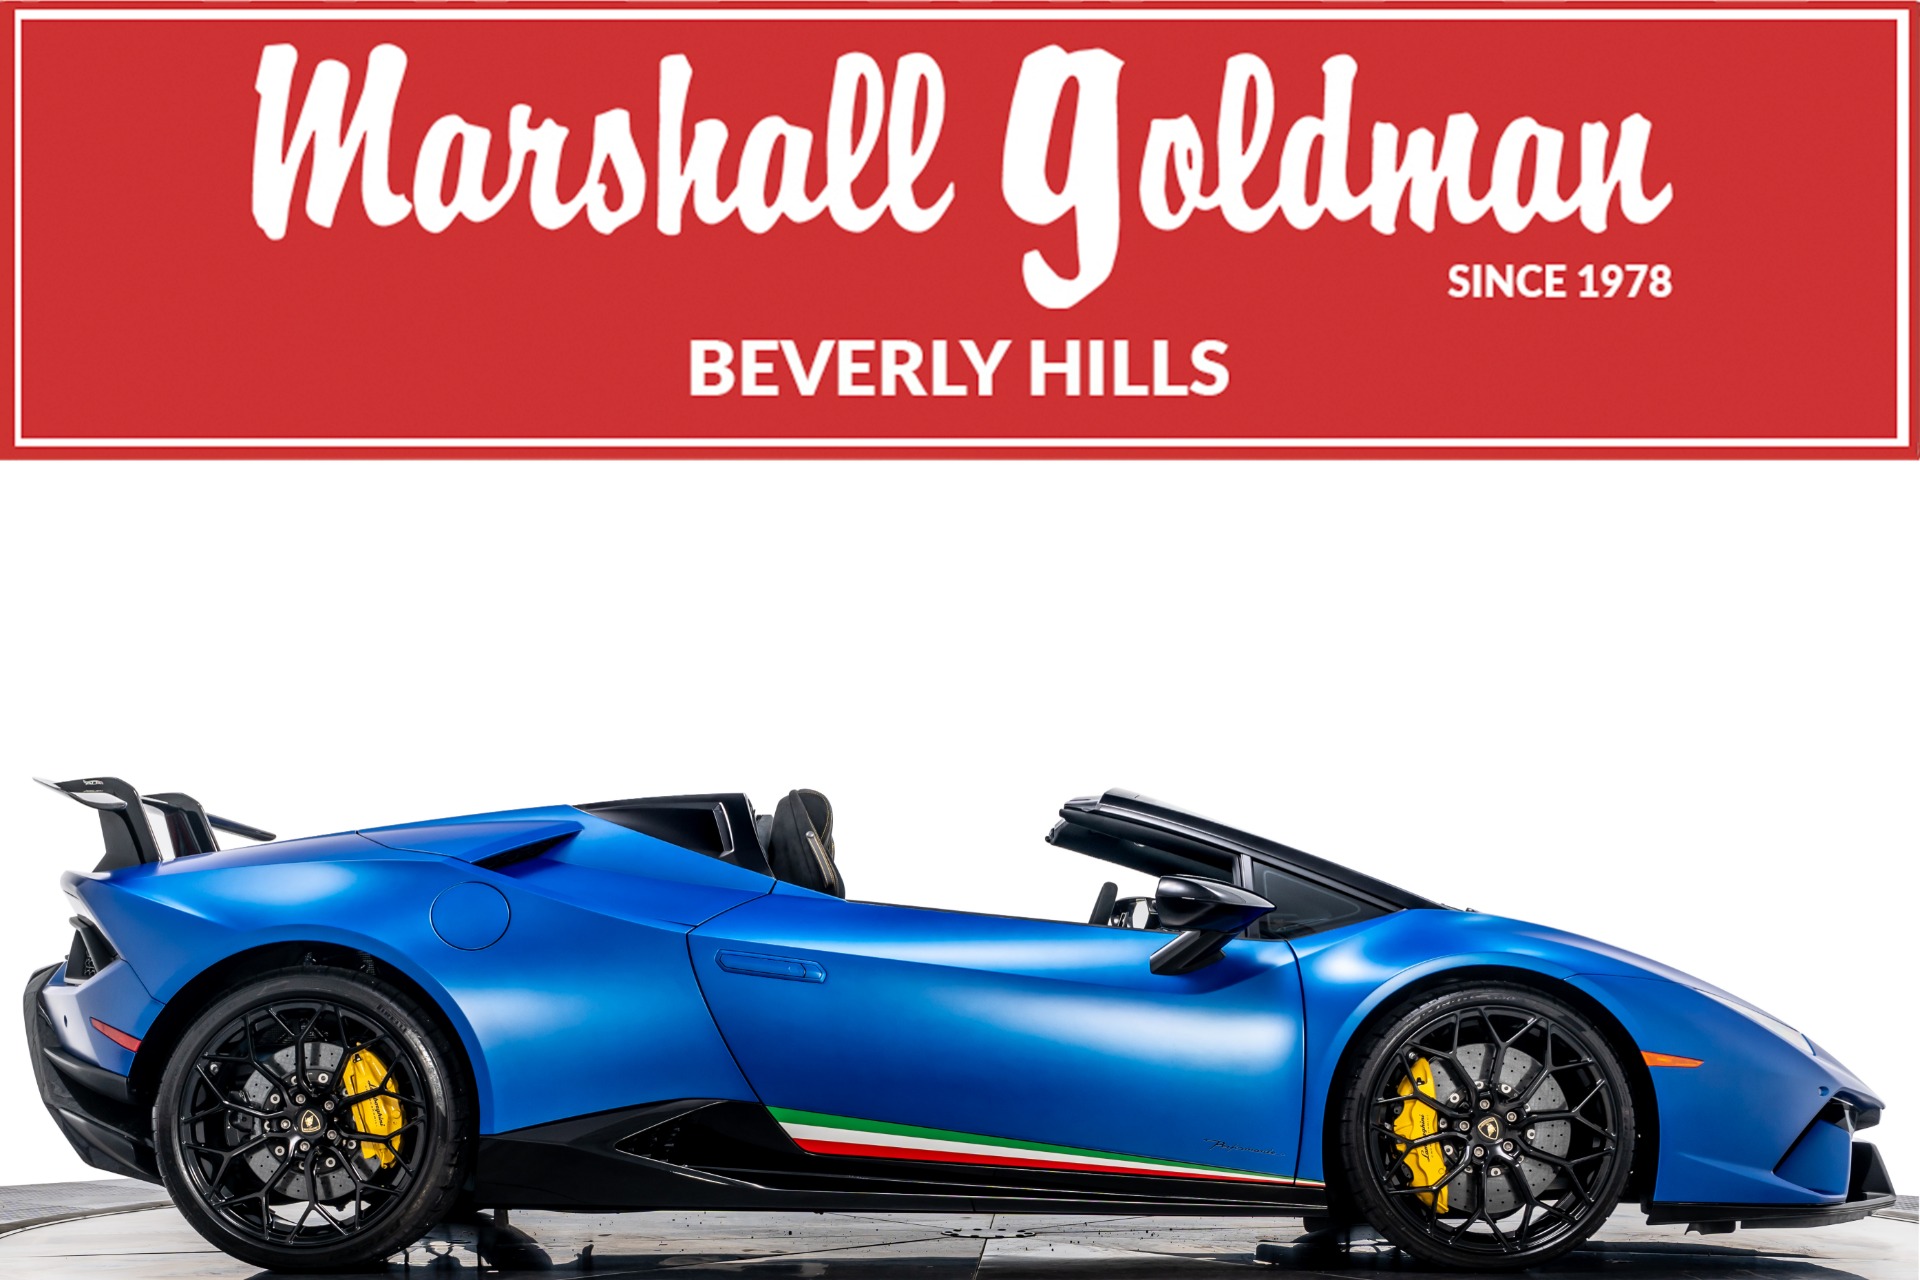 Used 2019 Lamborghini Huracan LP 640-4 Performante Spyder For Sale (Sold) |  Marshall Goldman Beverly Hills Stock #B21252